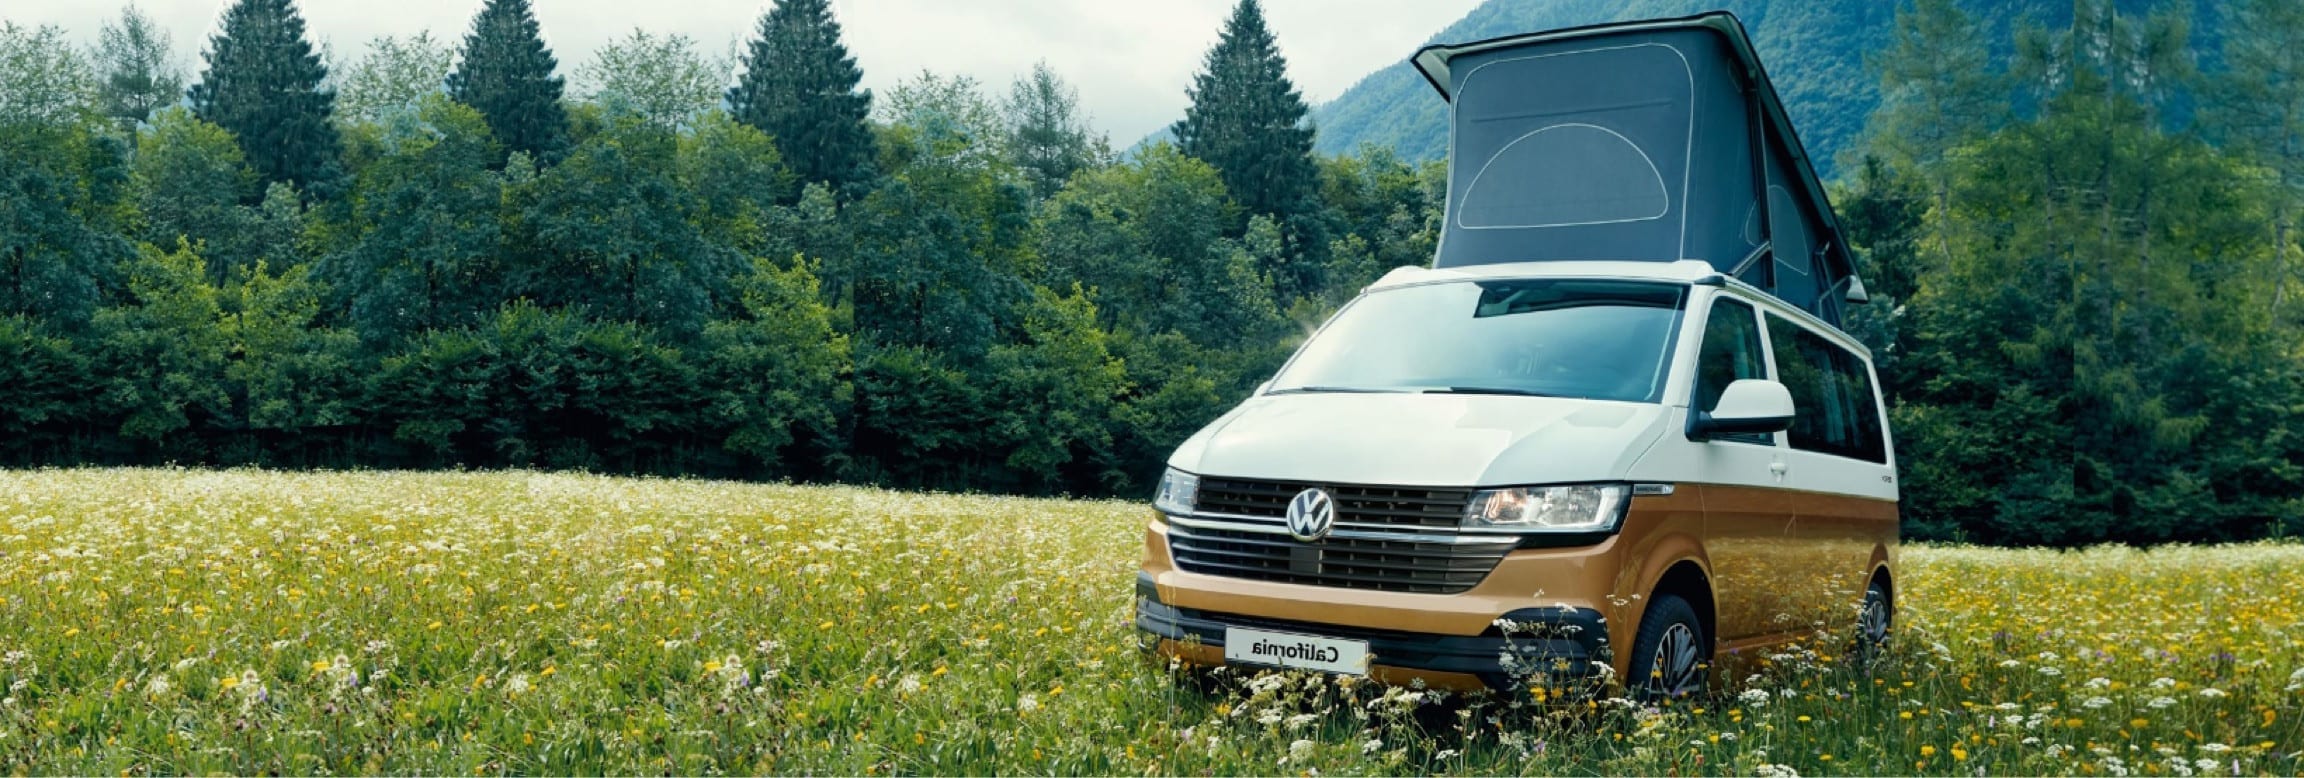 VW Camper Hire | VW Campervan Hire - Southampton Campers